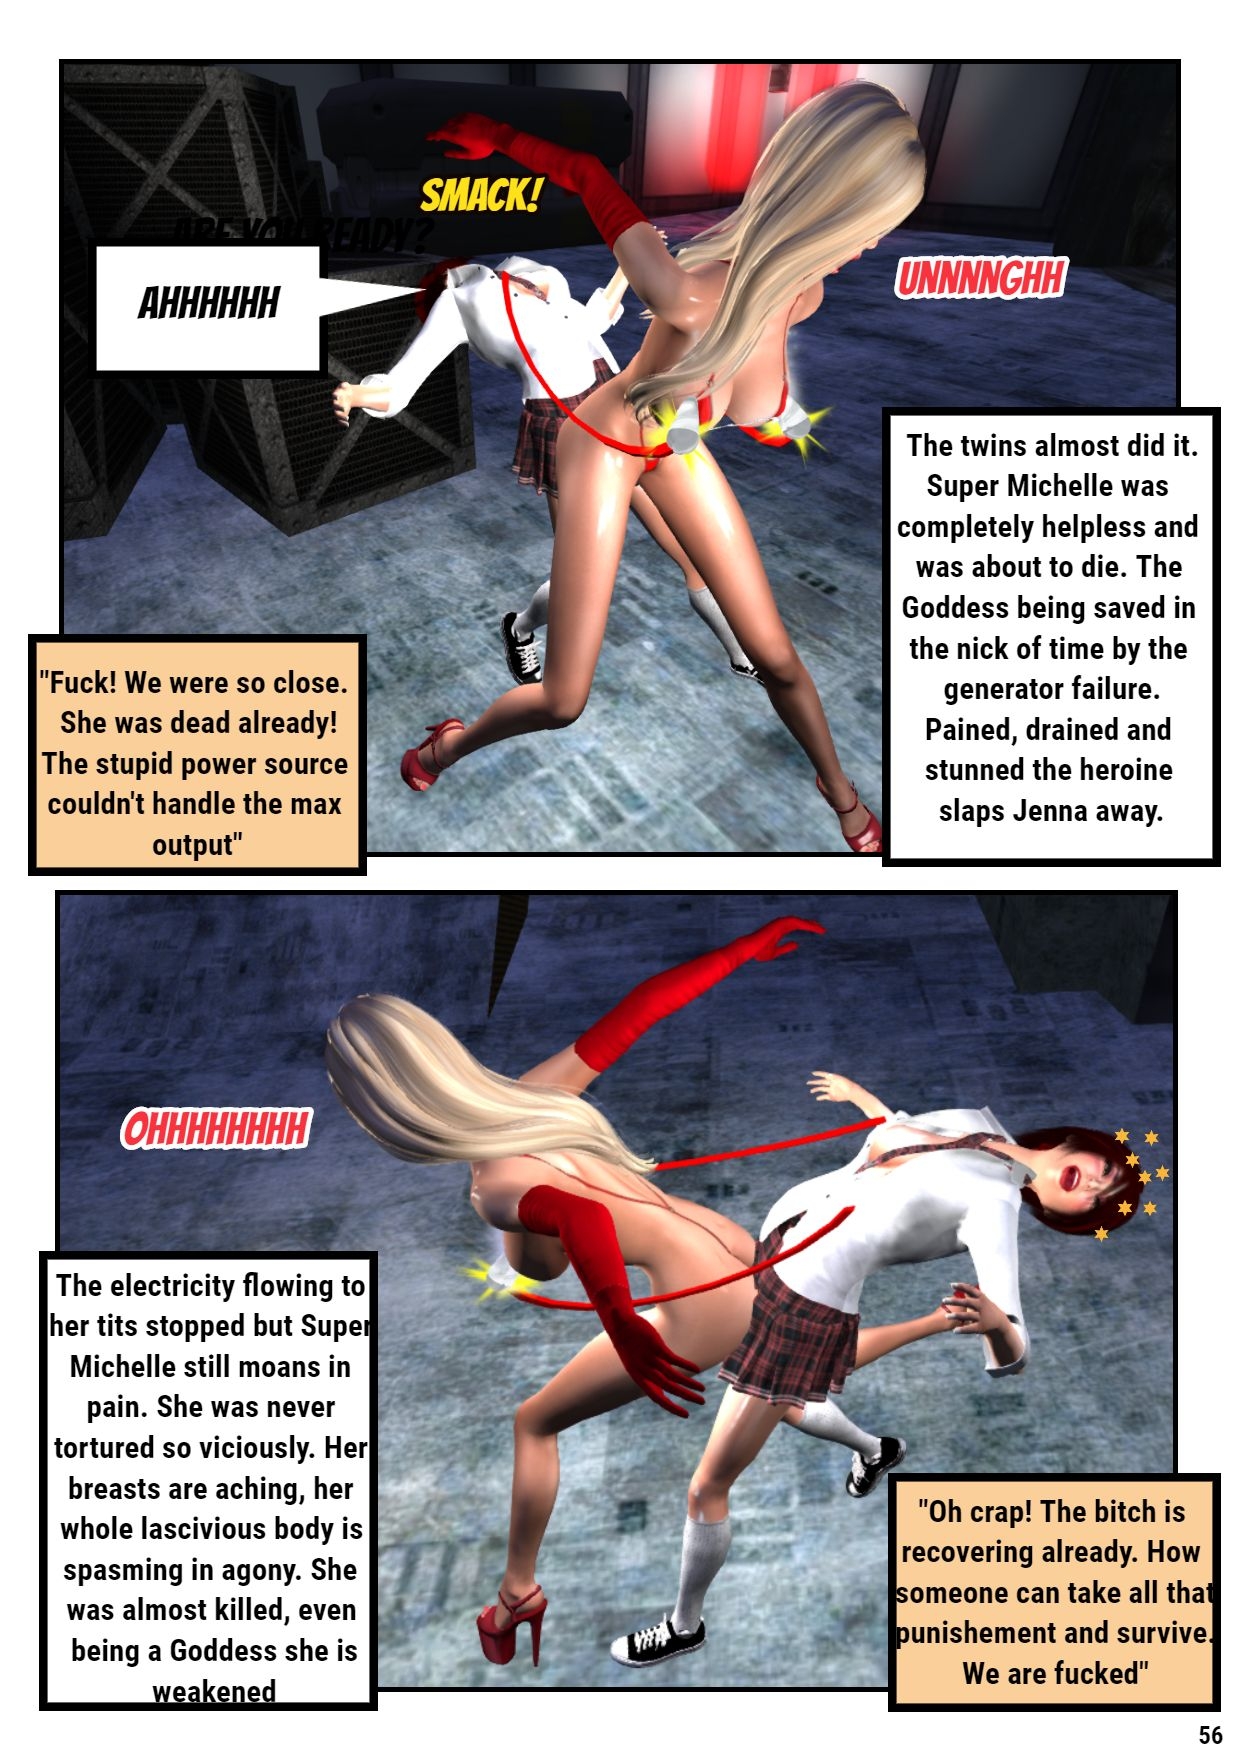 Super Michelle vs the Evil Twins - Superheroine in peril - Heroine comics 59